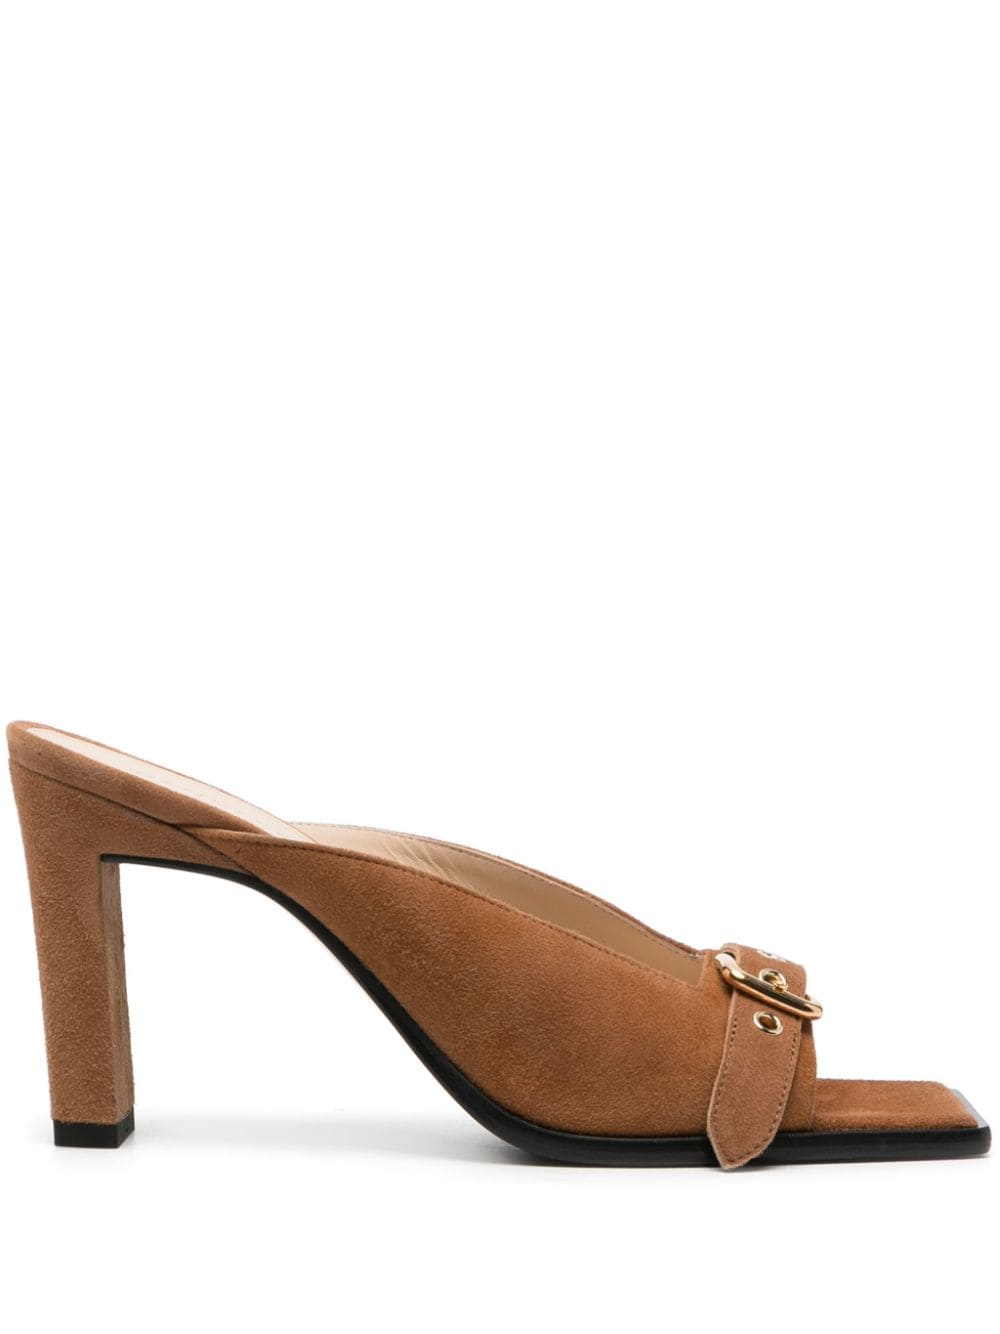 Wandler Isa 85mm sandals - Brown